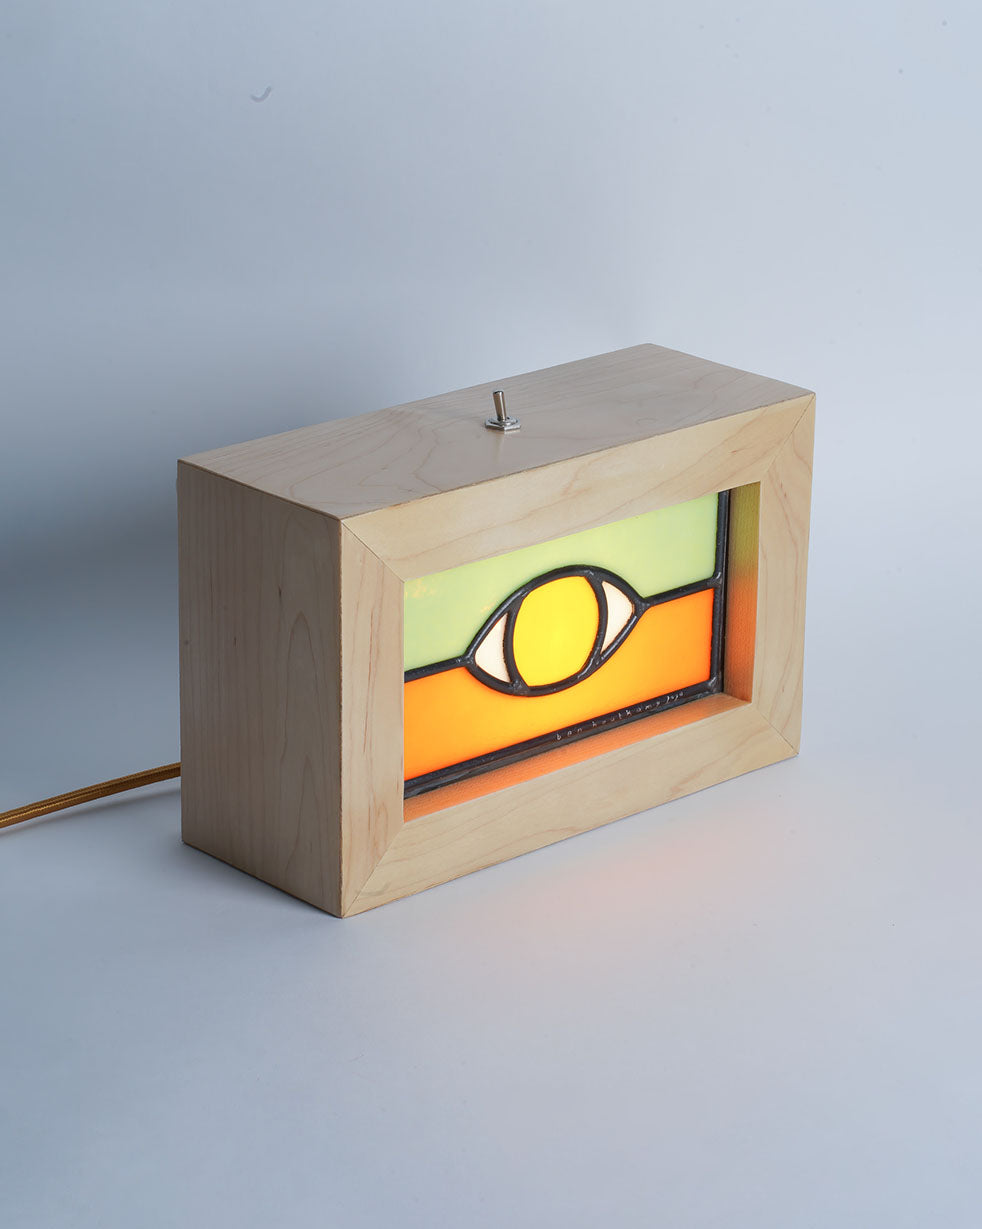 Ben Houtkamp: Stained Glass Light Box - Orange/Green